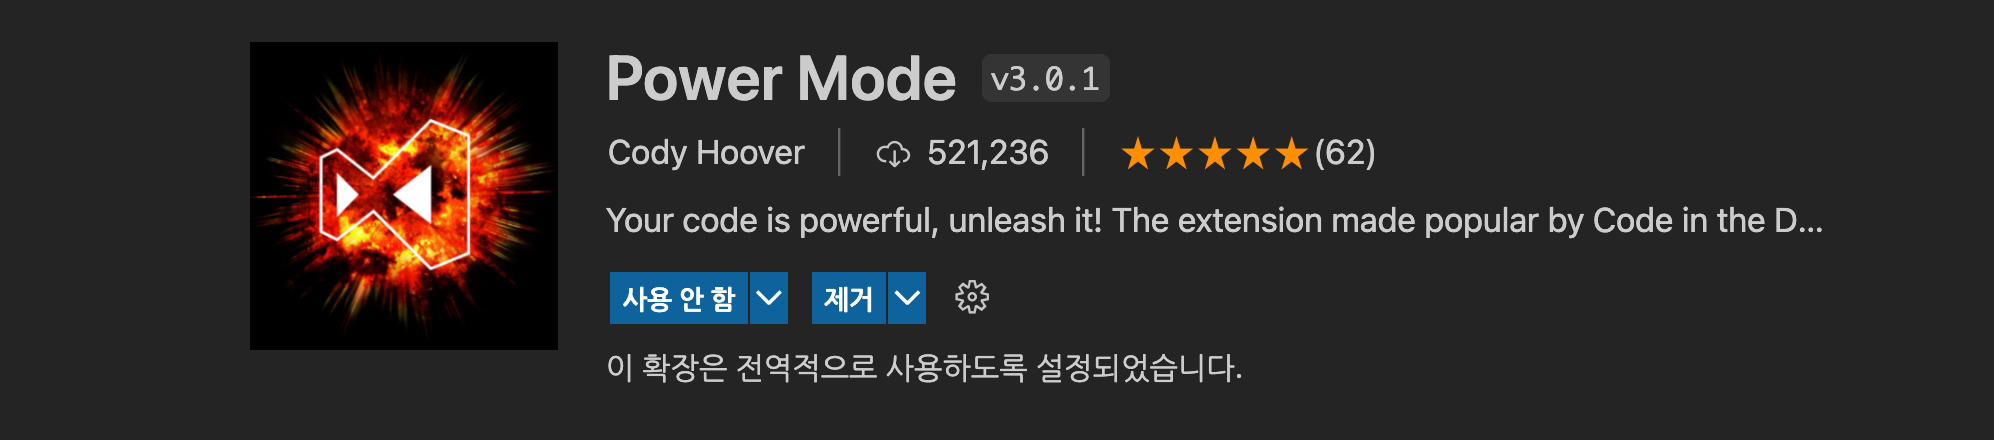 Power_Mode